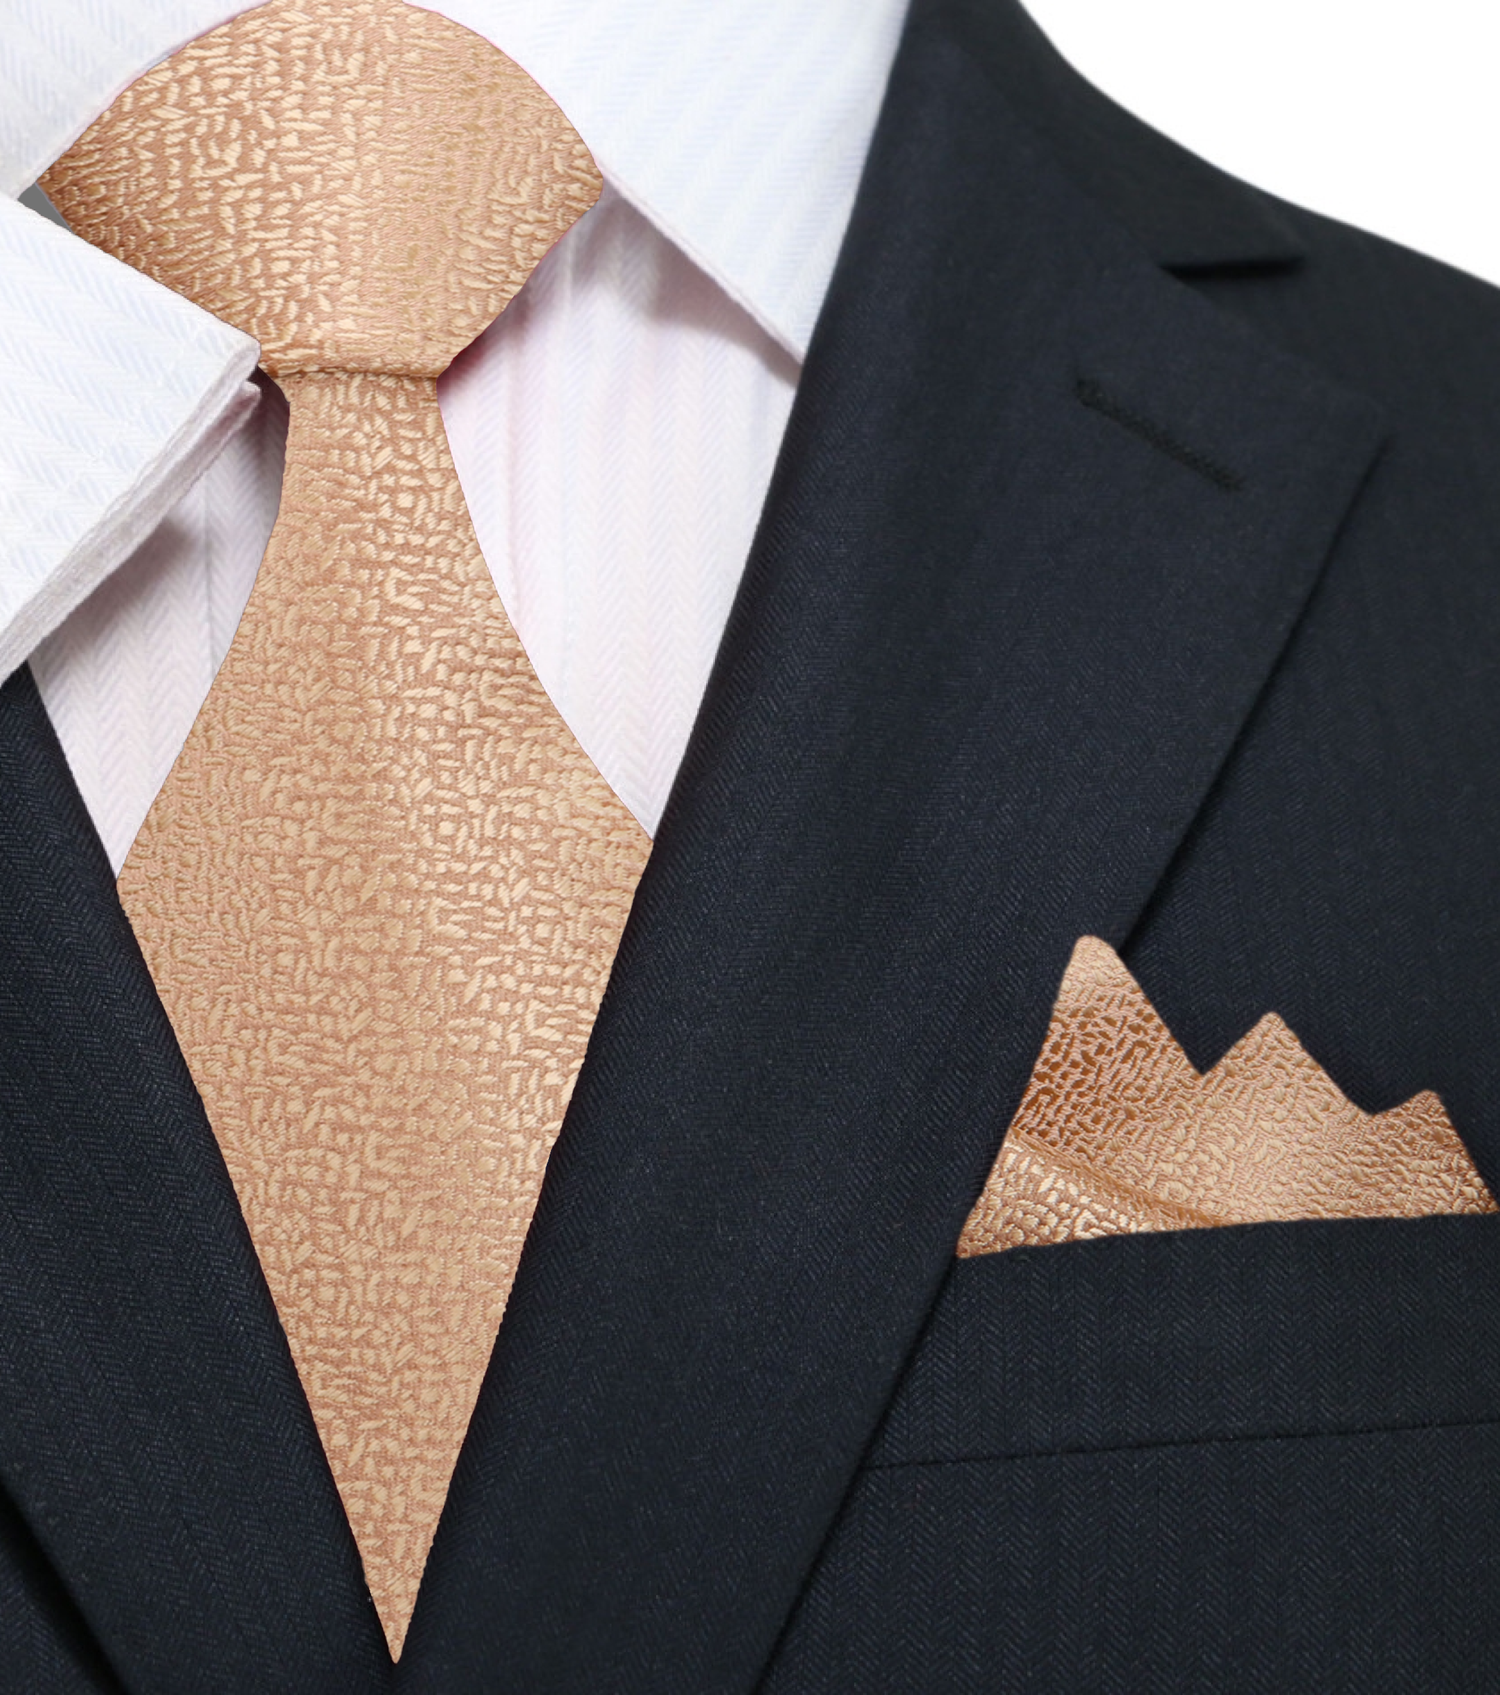 A Solid Golden Shimmer Pattern Silk Necktie, Matching Pocket Square||Gold